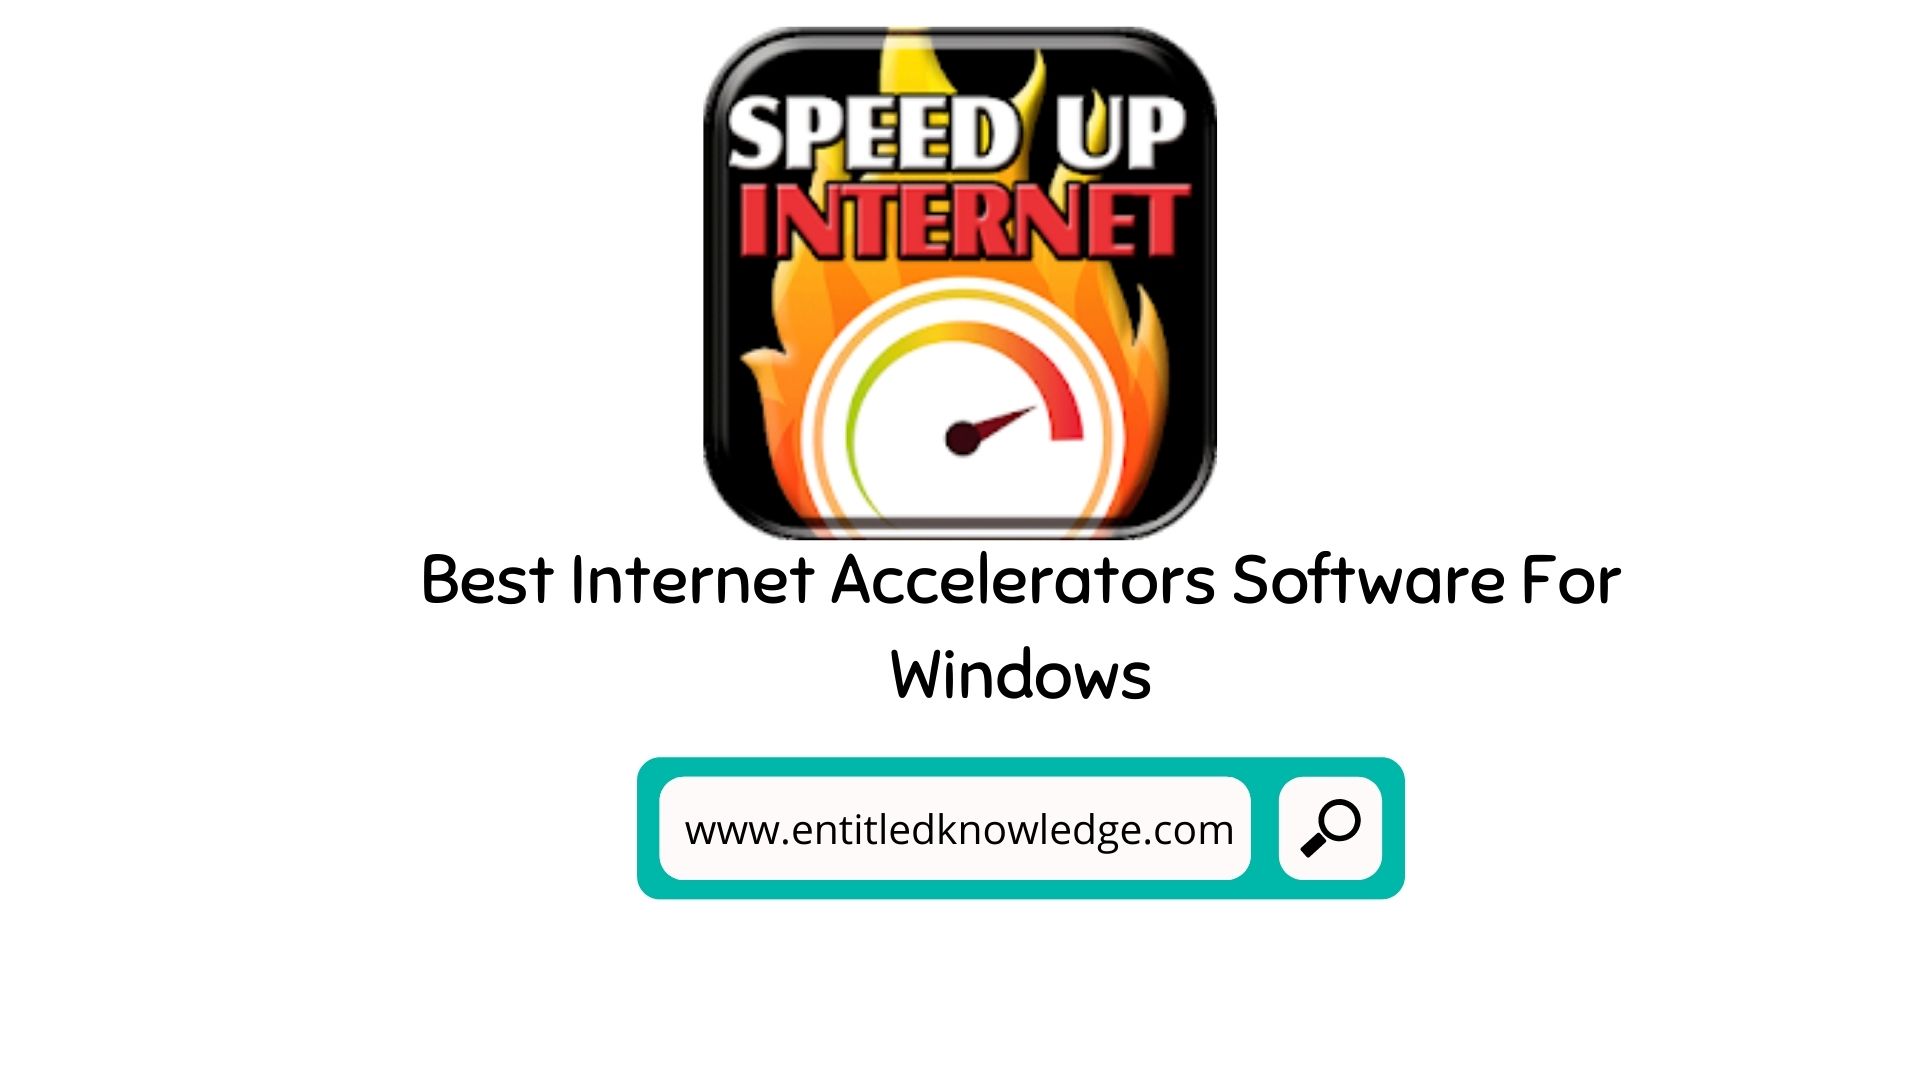 10 Best Internet Accelerators Software For Windows 10, 8, 7